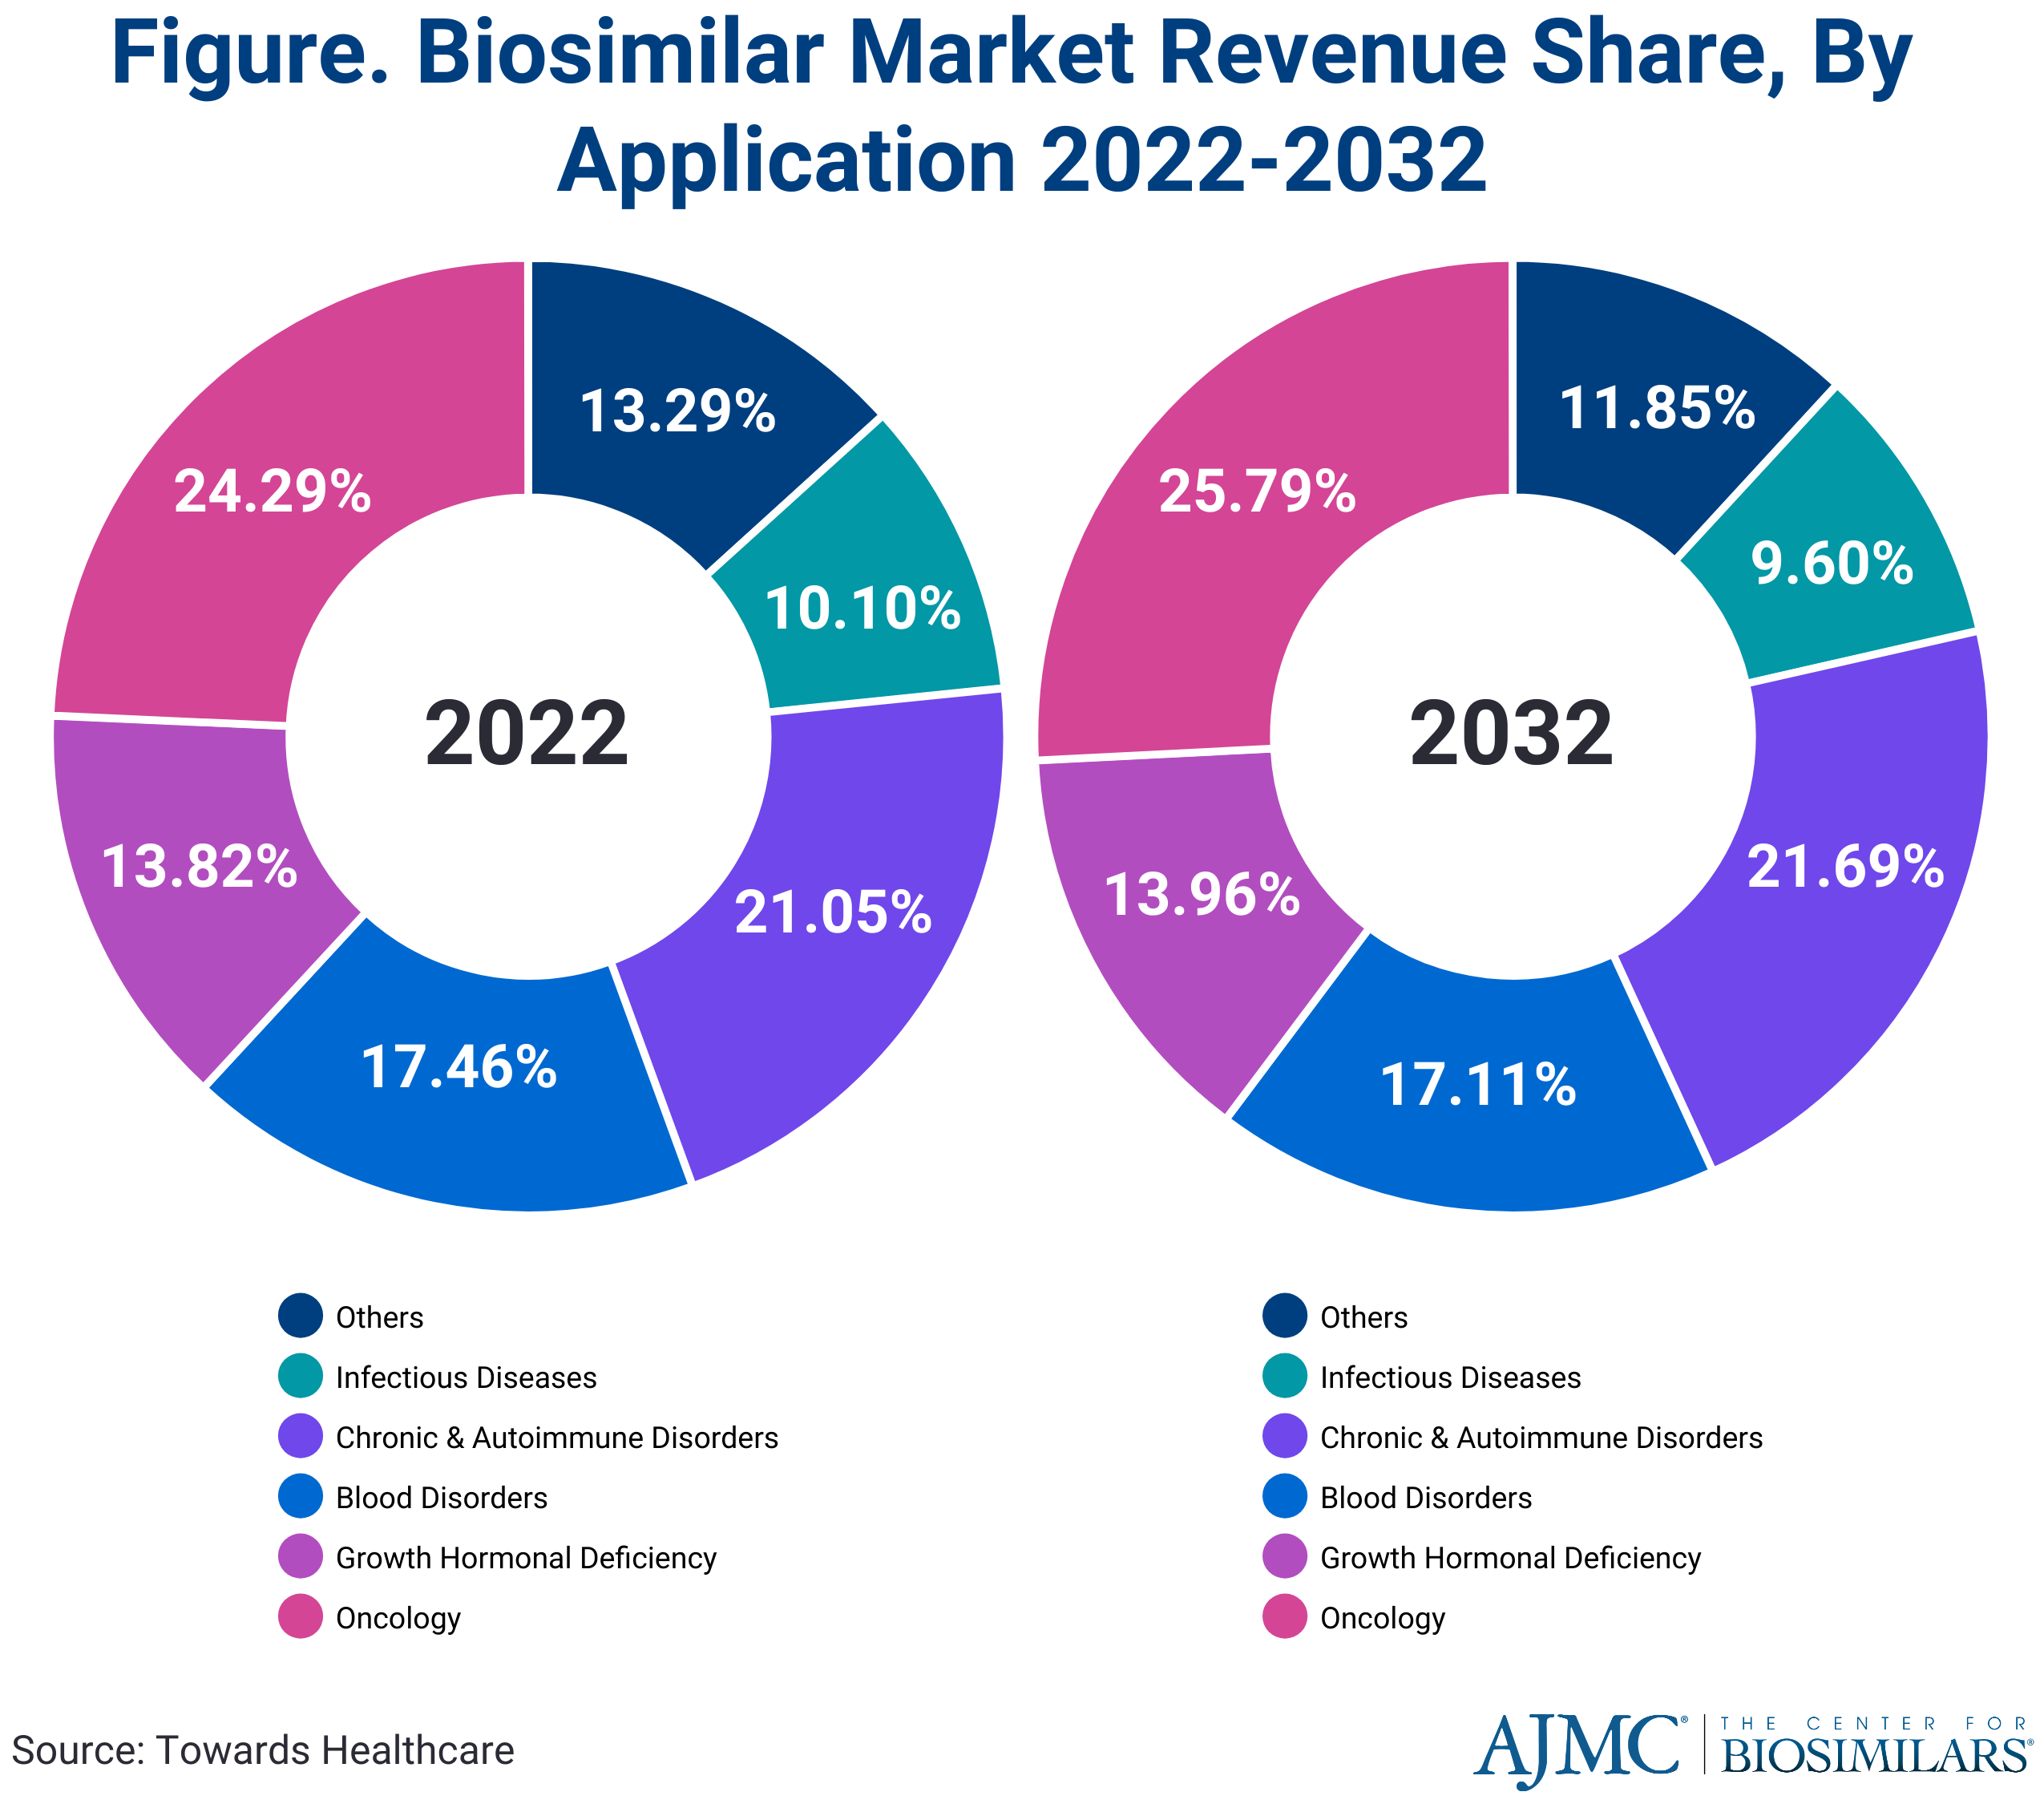 Figure. Biosimilar Market Revenue Share, by Application 2022-2032